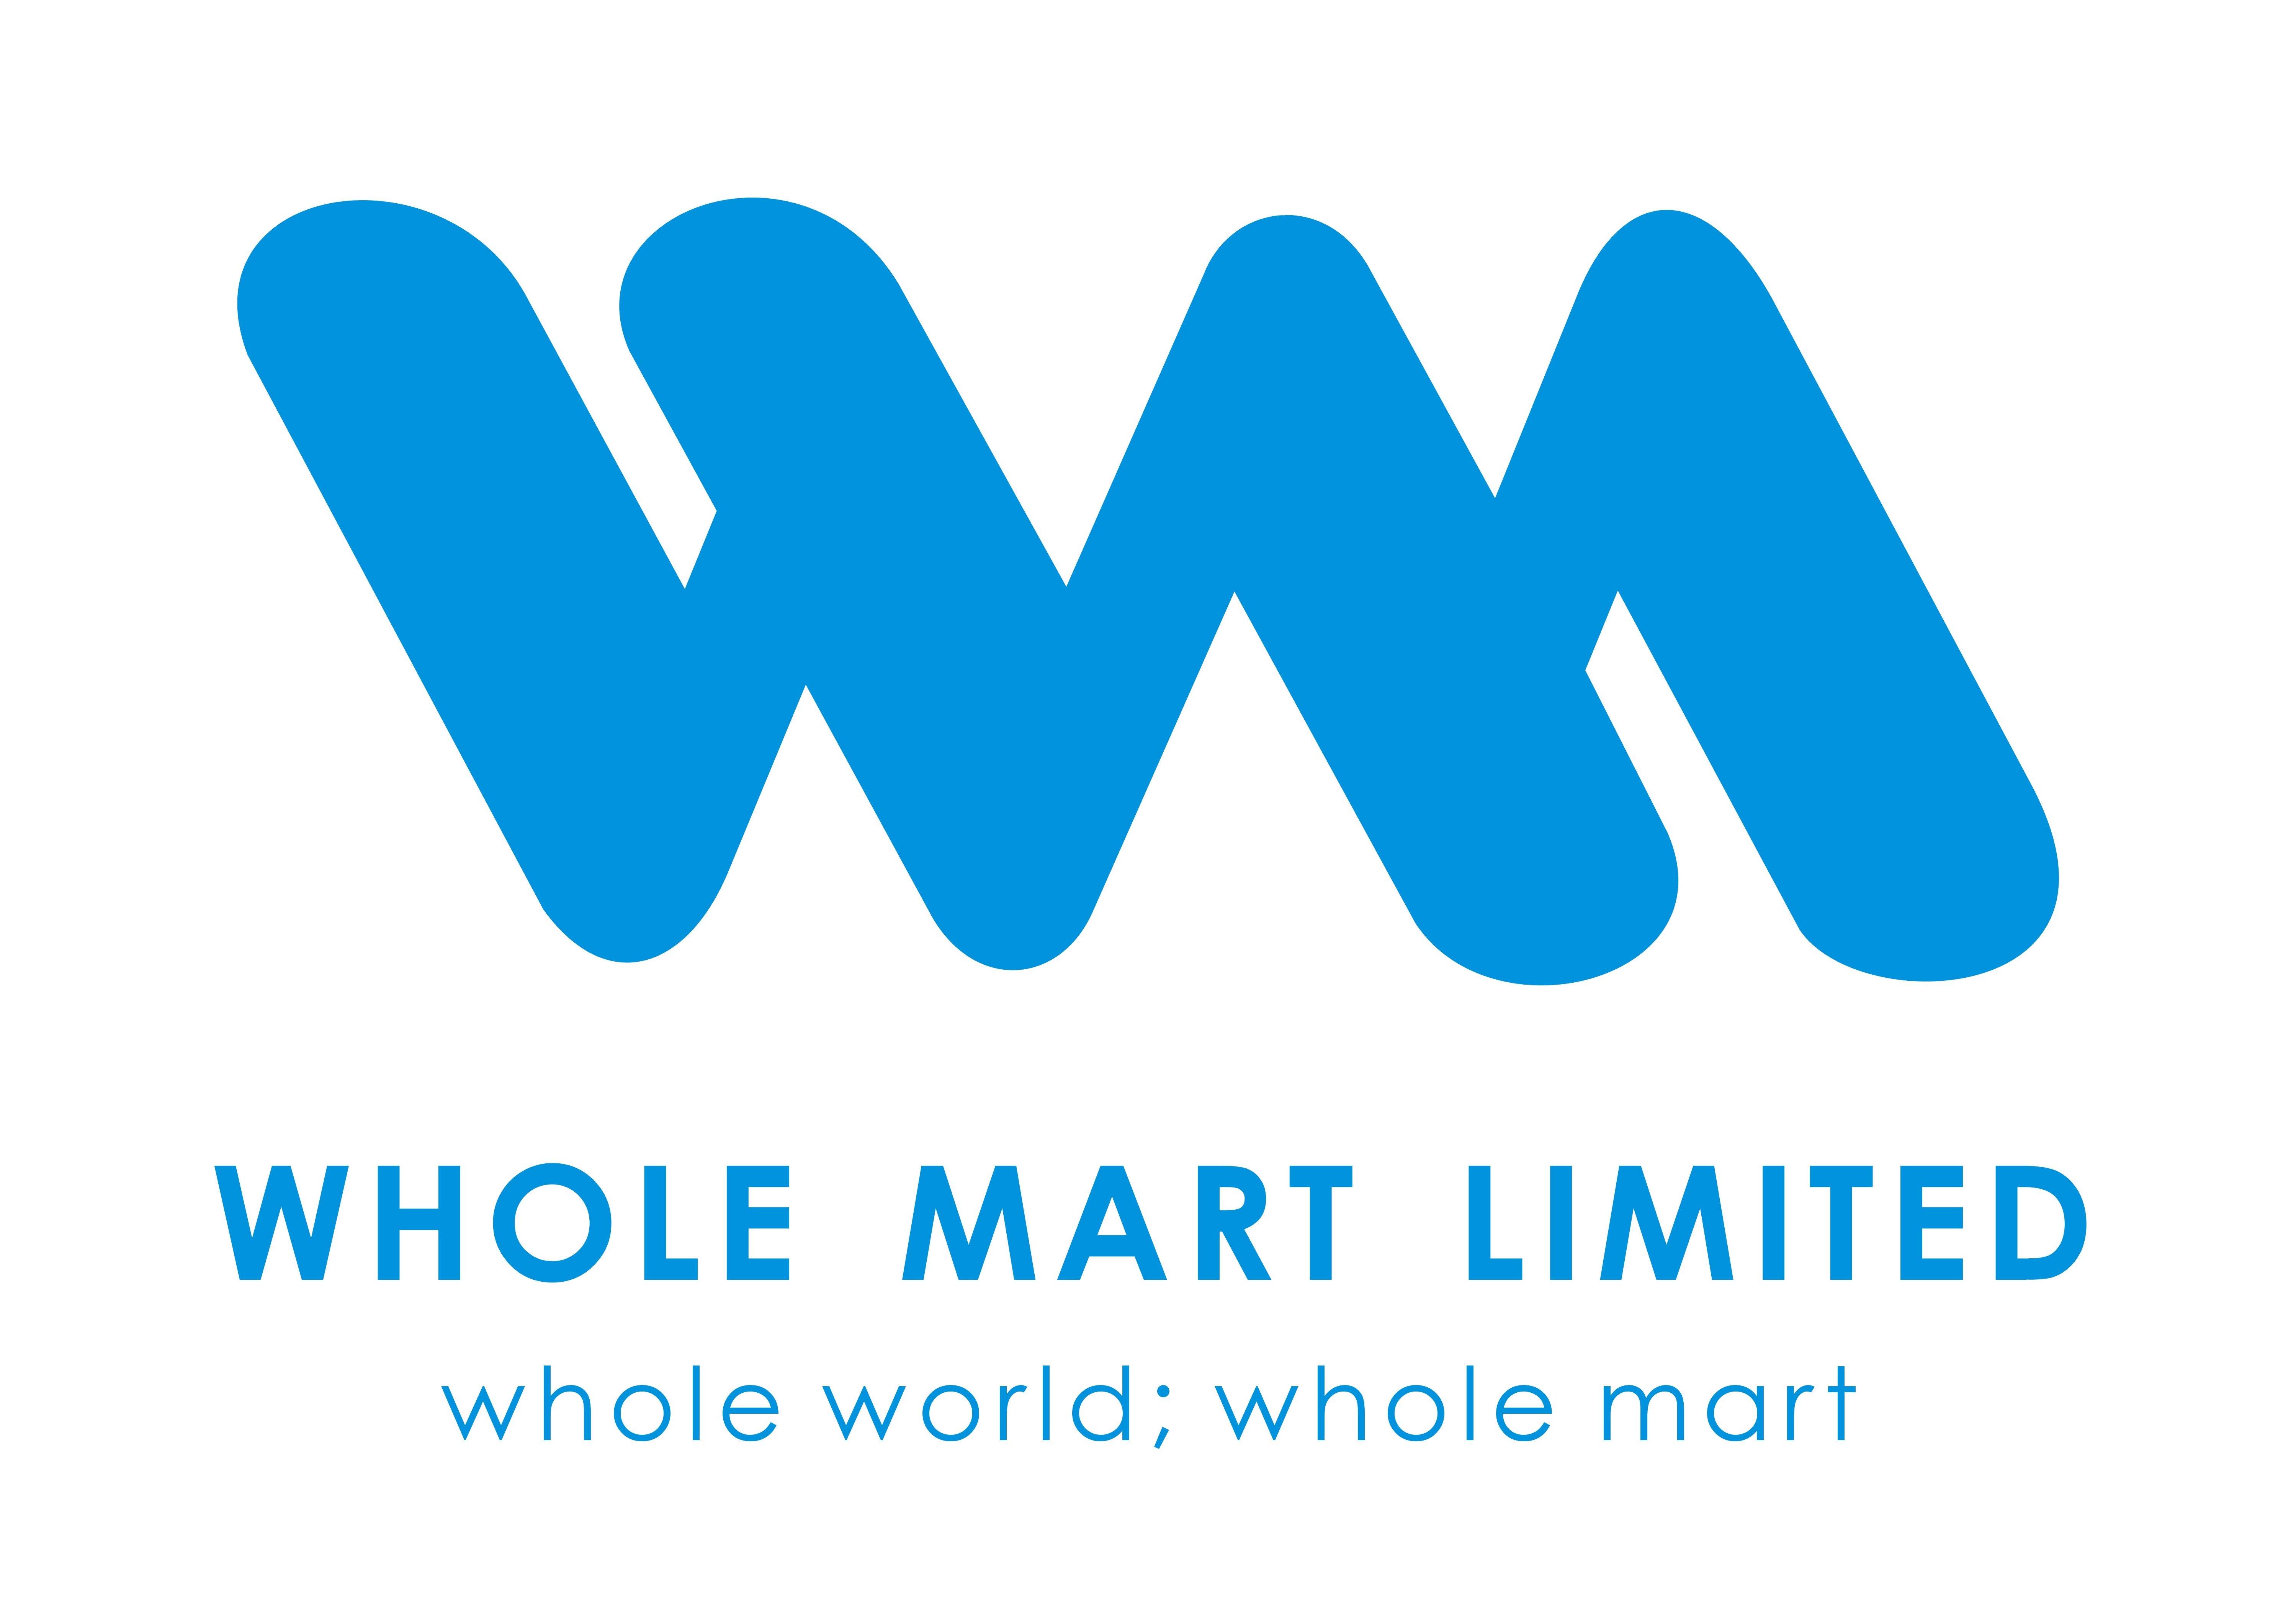 Whole Mart (SMC -Private) Limited